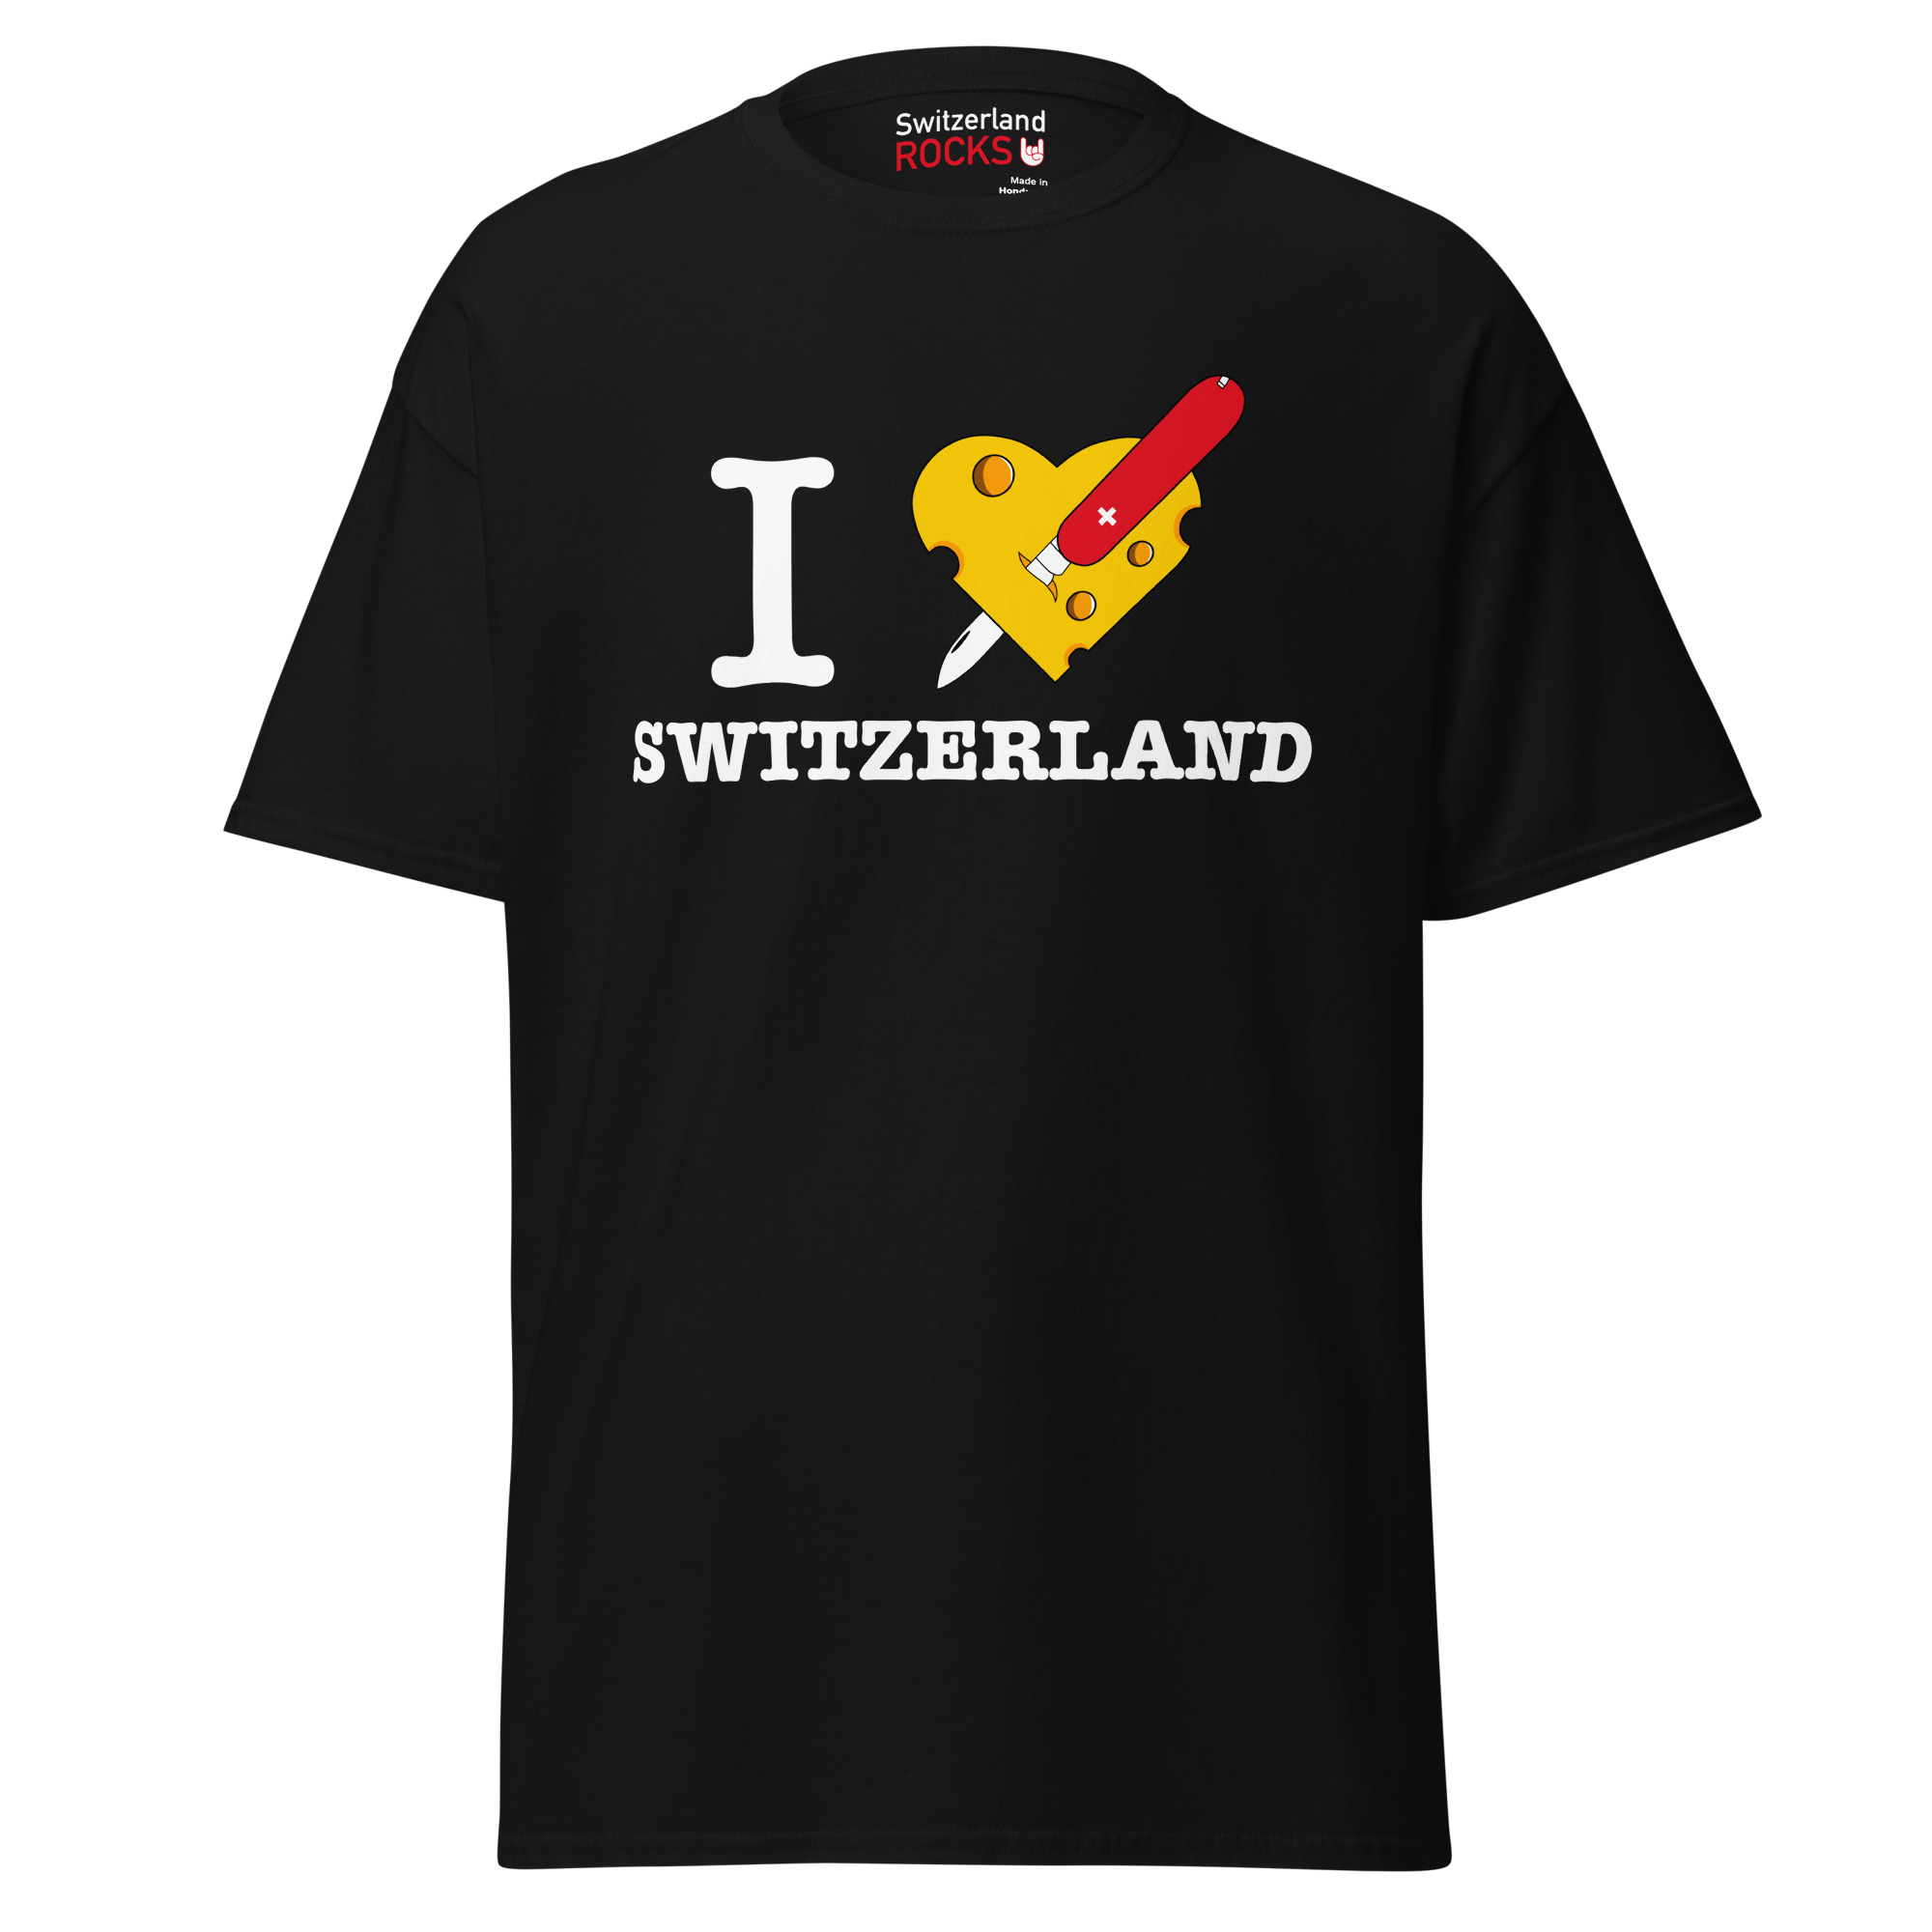 Black T-shirt – Switzerland Rocks – Swiss Knife Men's Clothing Wearyt